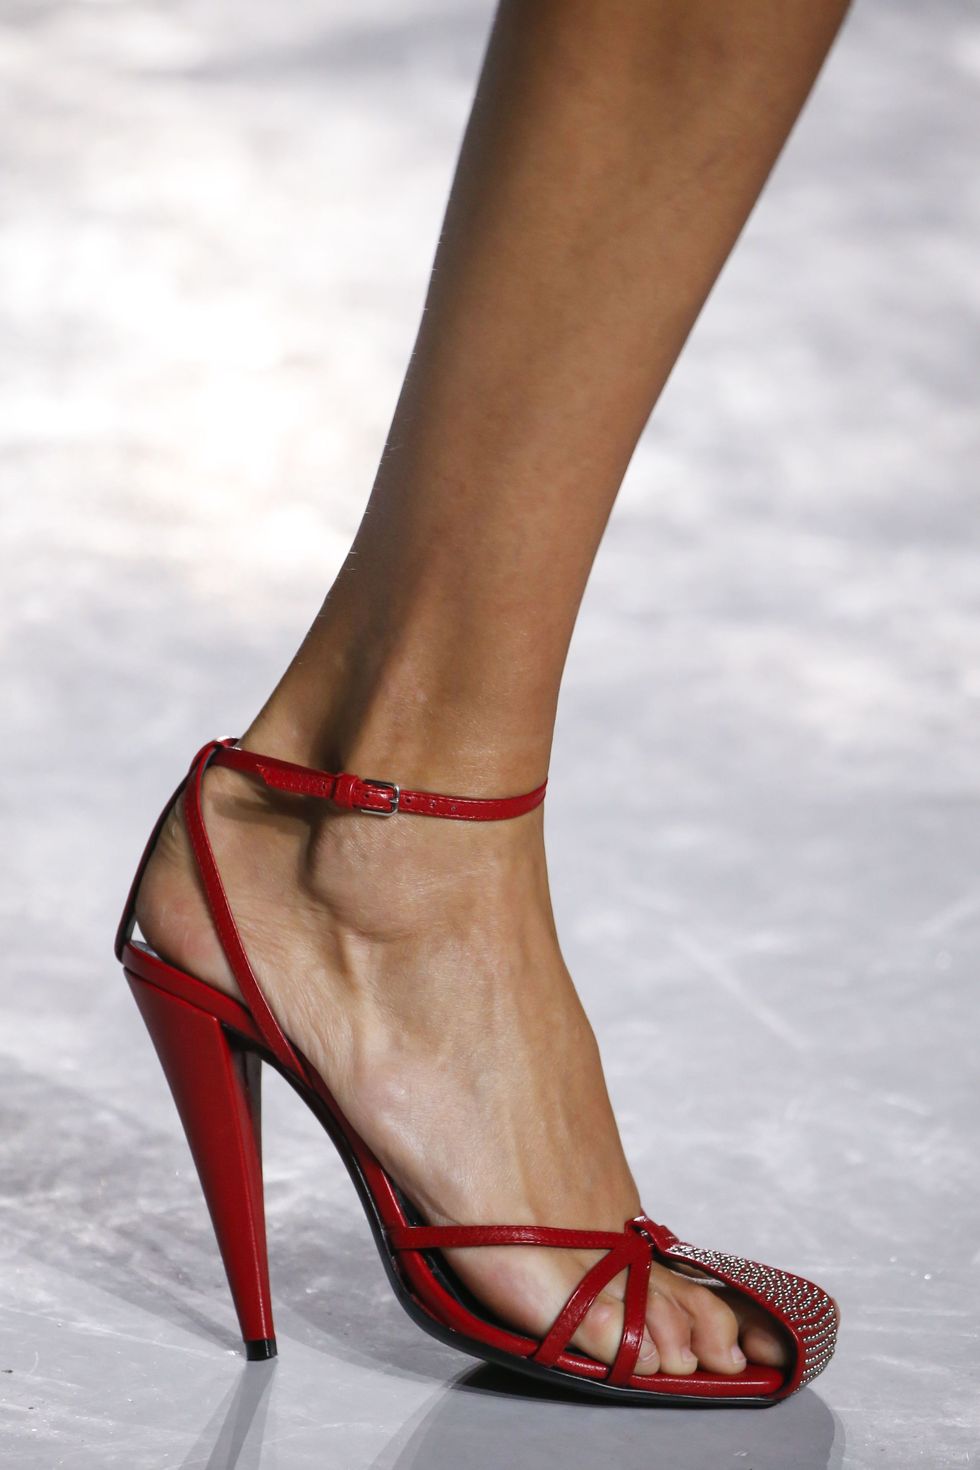 Footwear, High heels, Leg, Sandal, Fashion model, Red, Fashion, Human leg, Ankle, Shoe, 